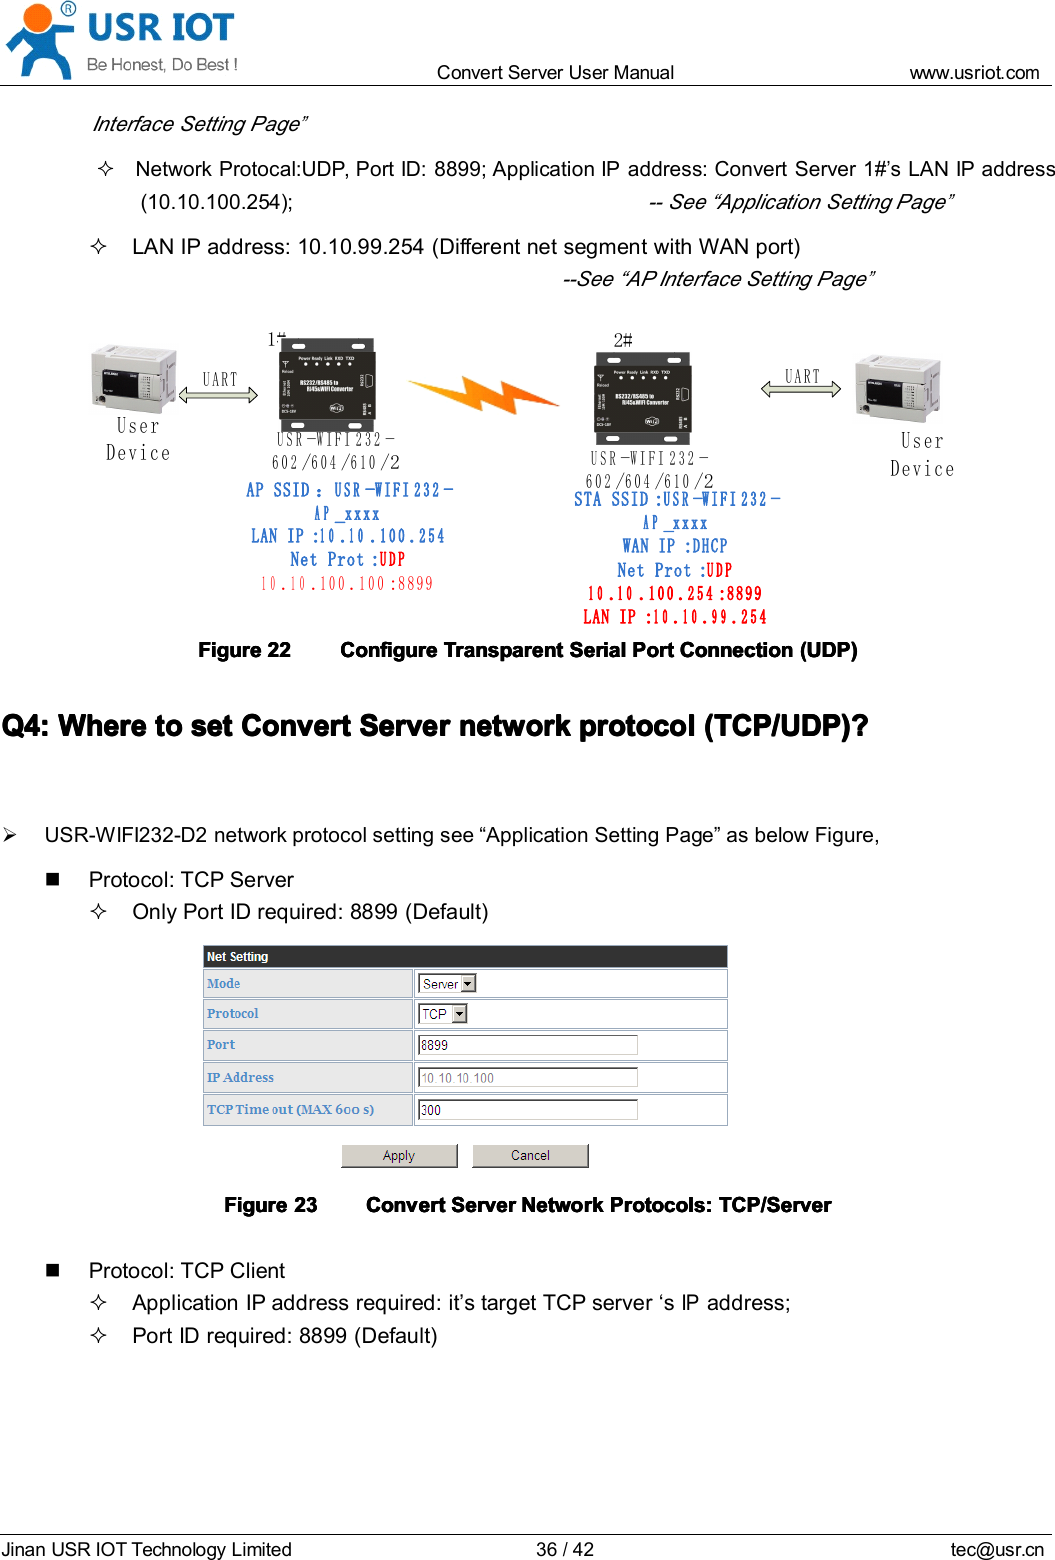 Convert Server User Manual www.usr iot.c omJinan USR IOT Technology Limited 36/42 tec@usr.cnInterface Setting Page”Network Protocal:UDP, Port ID: 8899; Application IP address: Convert Server 1#’s LAN IP address(10.10.100.254);-- See “ Application Setting Page”LAN IP address: 10.10.99.254 (Different net segment with WAN port)--See “ AP Interface Setting Page”USR-WIFI232-602/604/610/ 2User DeviceUARTUSR-WIFI232-602/604/610/ 2UARTAP SSID：USR-WIFI232-AP_xxxxLAN IP:10.10.100.254Net Prot:UDP10.10.100.100:8899STA SSID:USR-WIFI232-AP_xxxxWAN IP:DHCPNet Prot:UDP10.10.100.254:8899LAN IP:10.10.99.2541 #2 #User DeviceFigureFigureFigureFigure 22222222 ConfigureConfigureConfigureConfigure TransparentTransparentTransparentTransparent SerialSerialSerialSerial PortPortPortPort ConnectionConnectionConnectionConnection (UDP)(UDP)(UDP)(UDP)Q4:Q4:Q4:Q4: WhereWhereWhereWhere totototo setsetsetset ConvertConvertConvertConvert ServerServerServerServer networknetworknetworknetwork protocolprotocolprotocolprotocol (TCP/UDP)?(TCP/UDP)?(TCP/UDP)?(TCP/UDP)?USR-WIFI232-D2 network protocol setting see “ Application Setting Page ” as below Figure,Protocol: TCP ServerOnly Port ID required: 8899 (Default)FigureFigureFigureFigure 23232323 ConvertConvertConvertConvert ServerServerServerServer NetworkNetworkNetworkNetwork Protocols:Protocols:Protocols:Protocols: TCP/ServerTCP/ServerTCP/ServerTCP/ServerProtocol: TCP ClientApplication IP address required: it ’ s target TCP server ‘ sIPaddress;Port ID required: 8899 (Default)